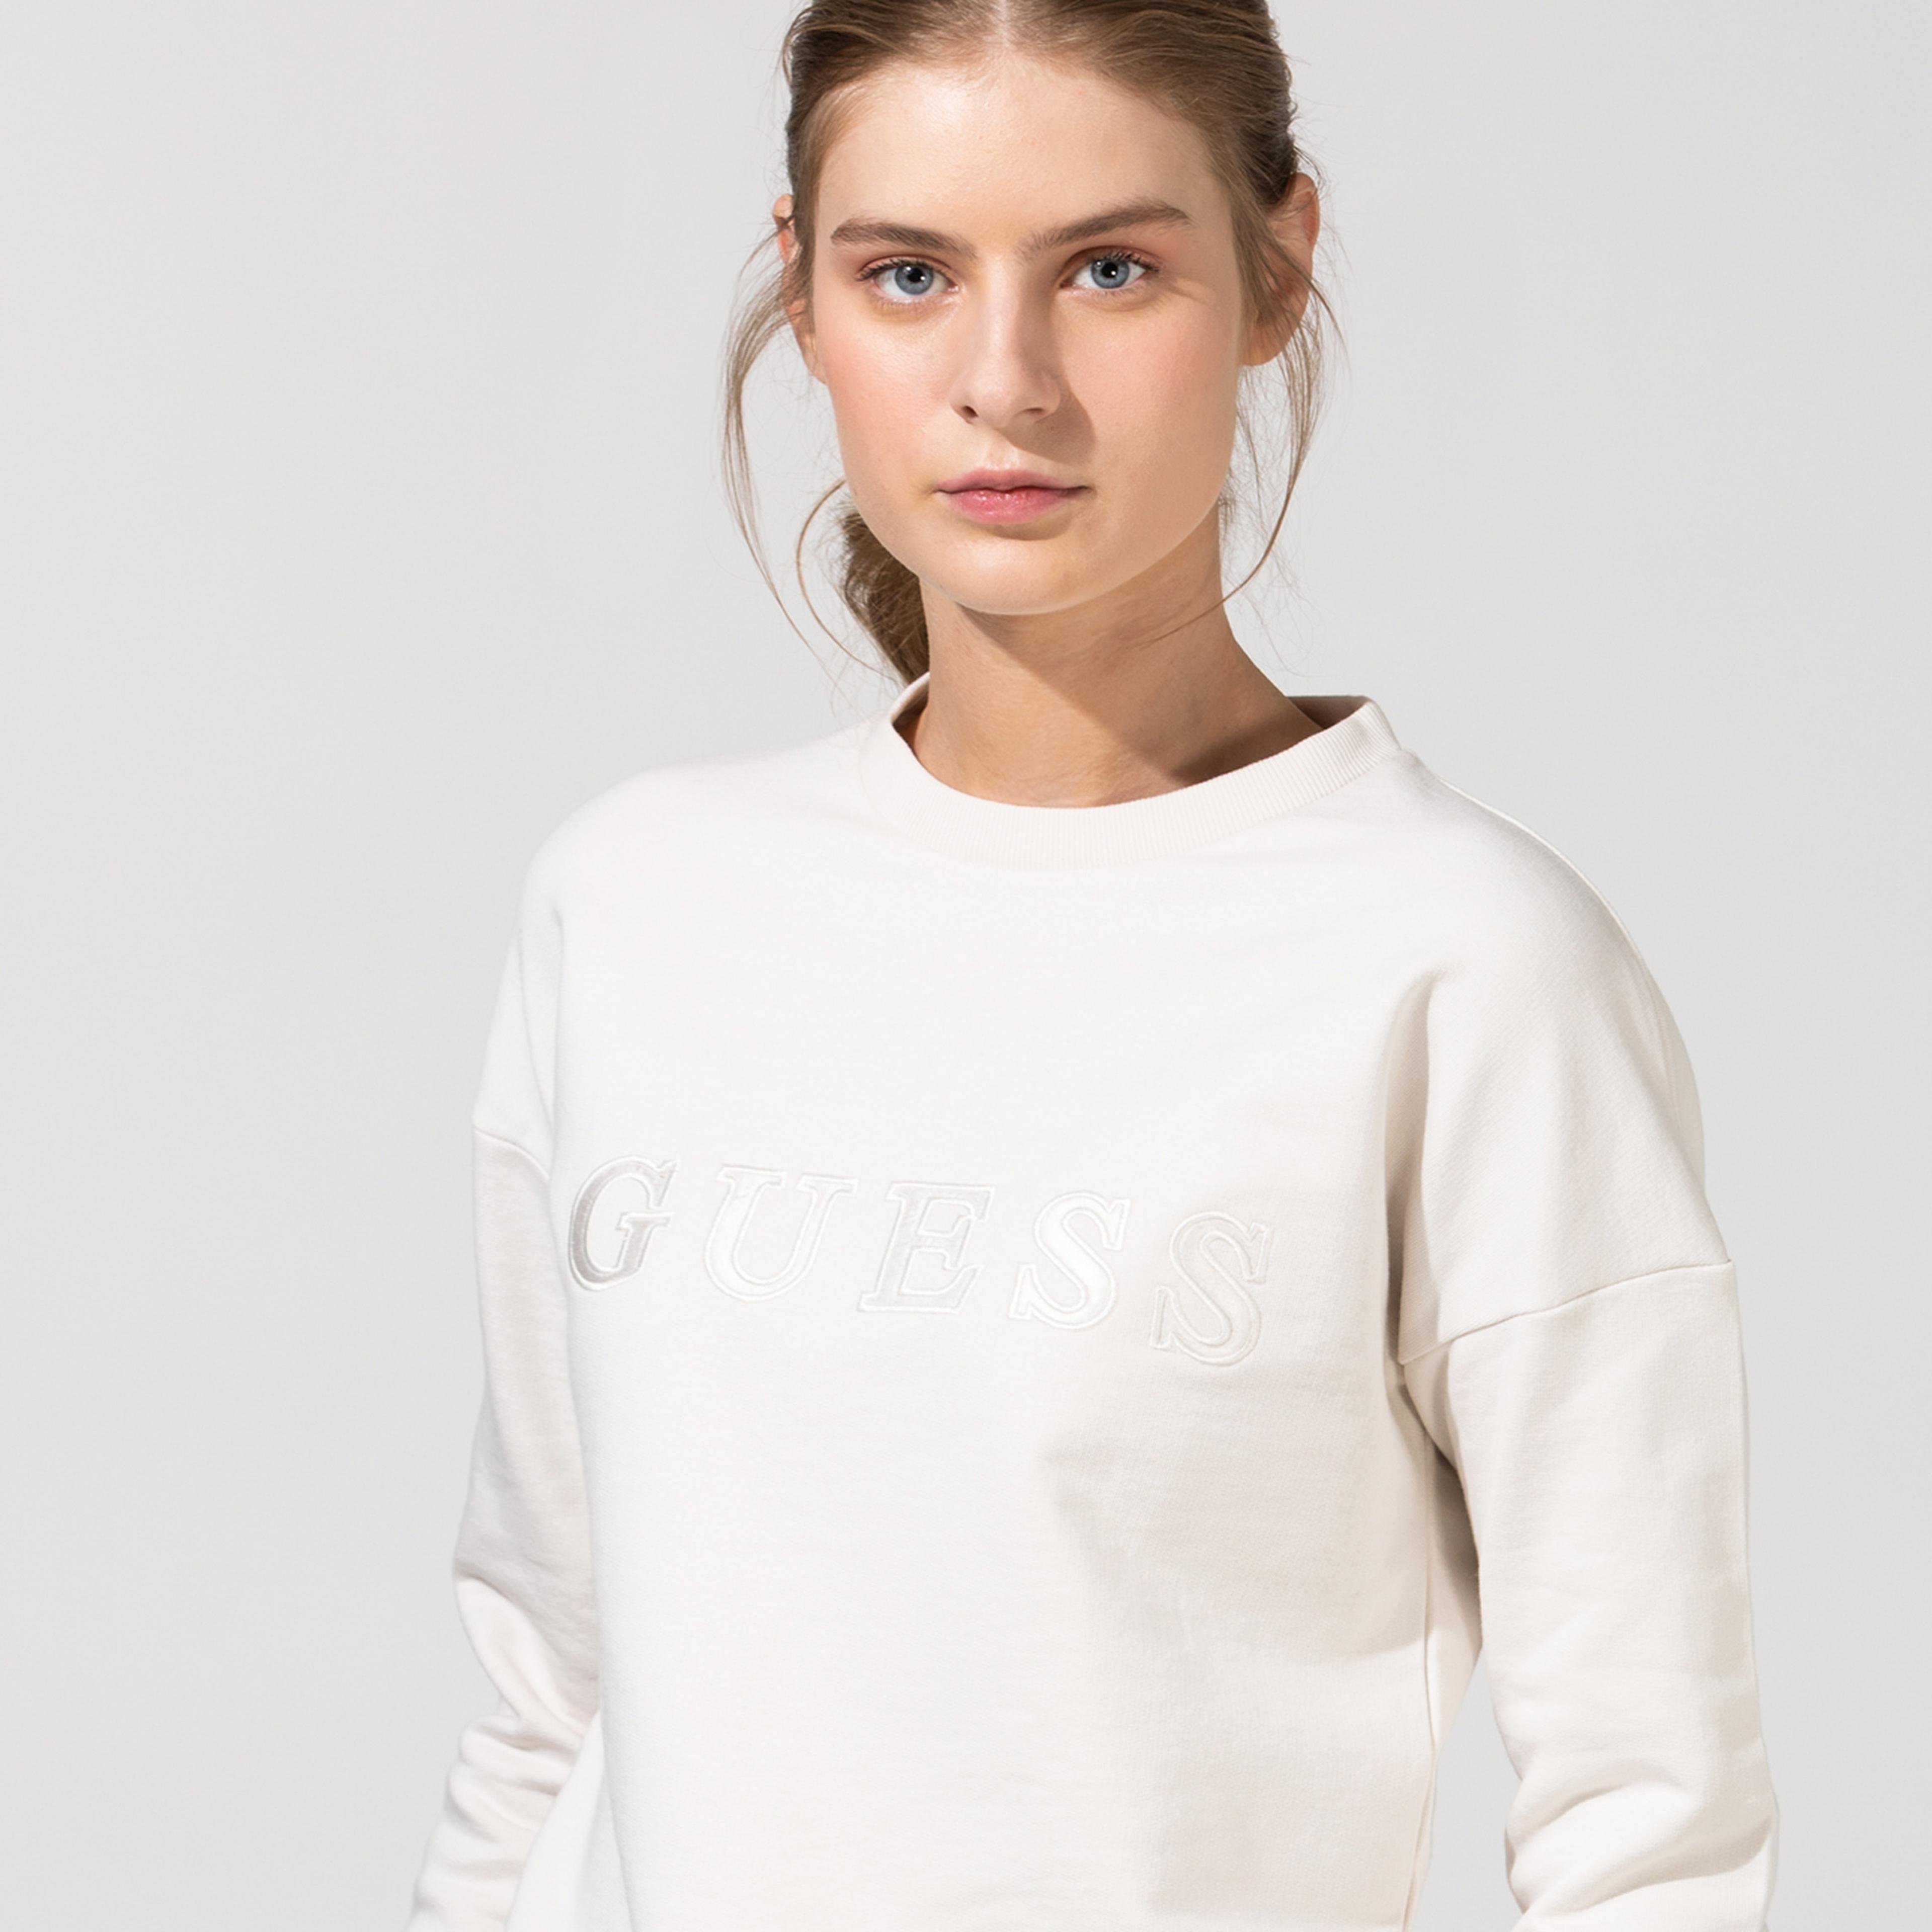 Guess Kadın Beyaz Sweatshirt